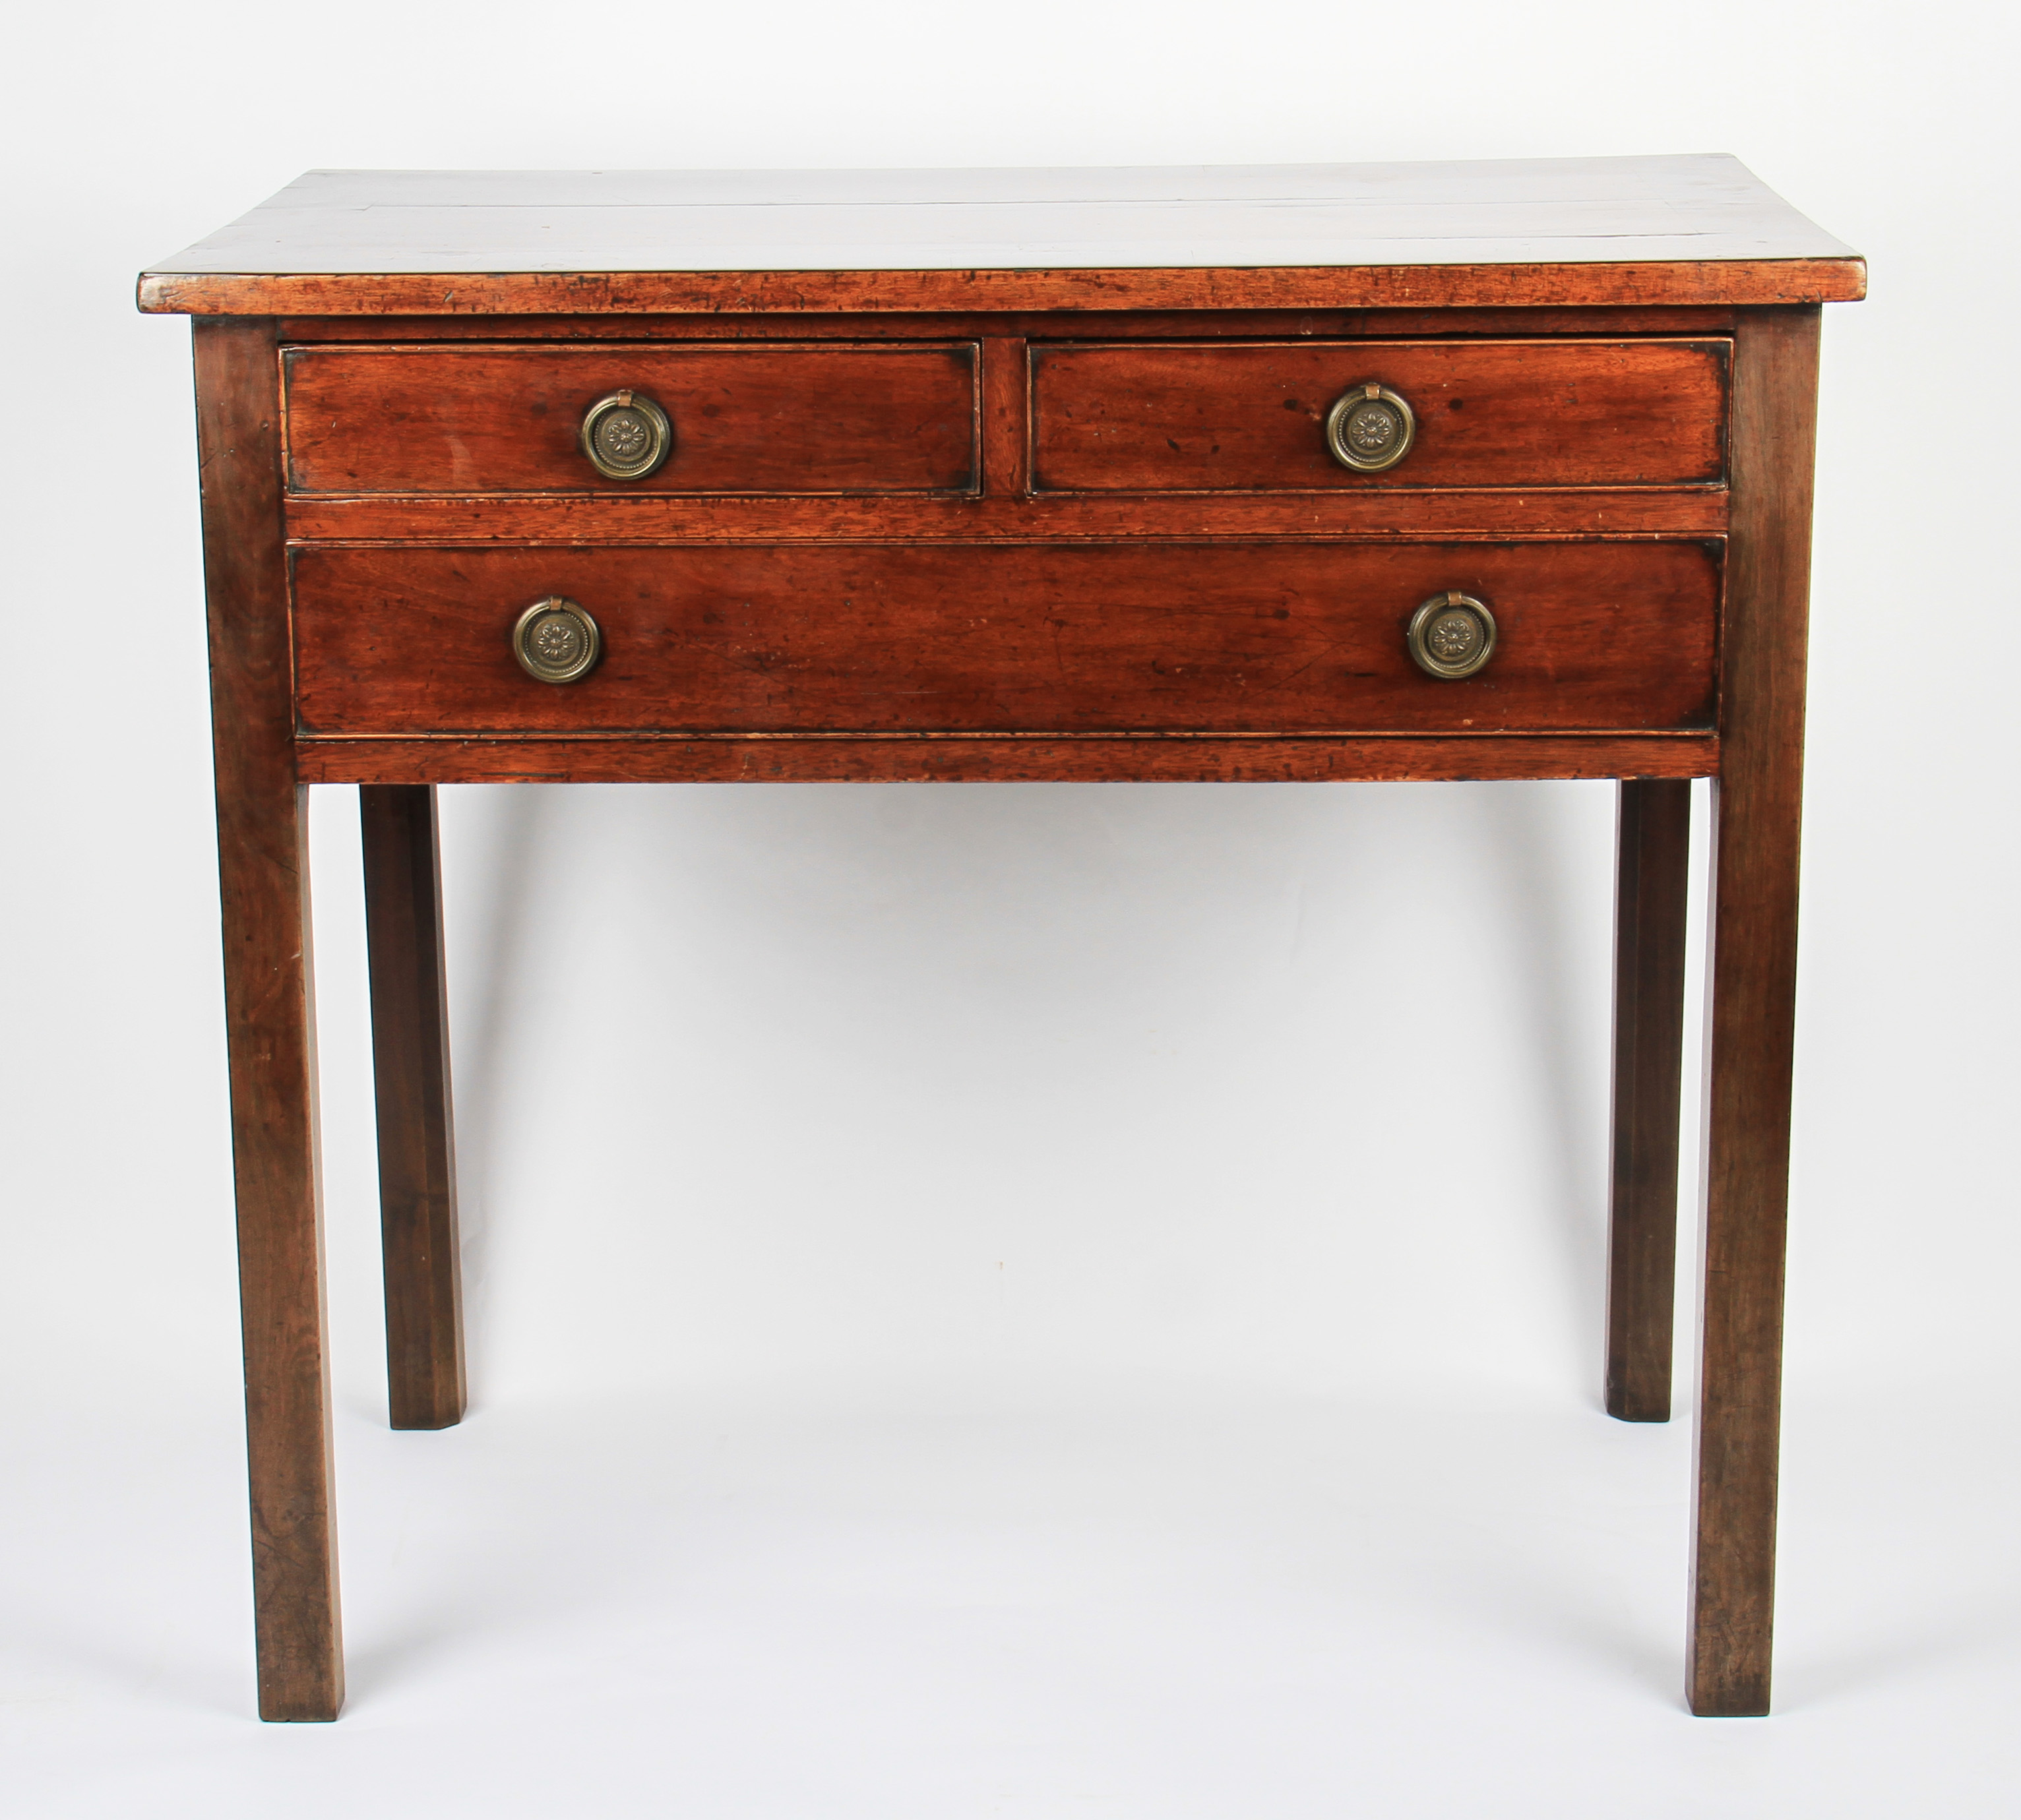 A 19th Century mahogany low boy having two short over one long drawer, each having circular brass